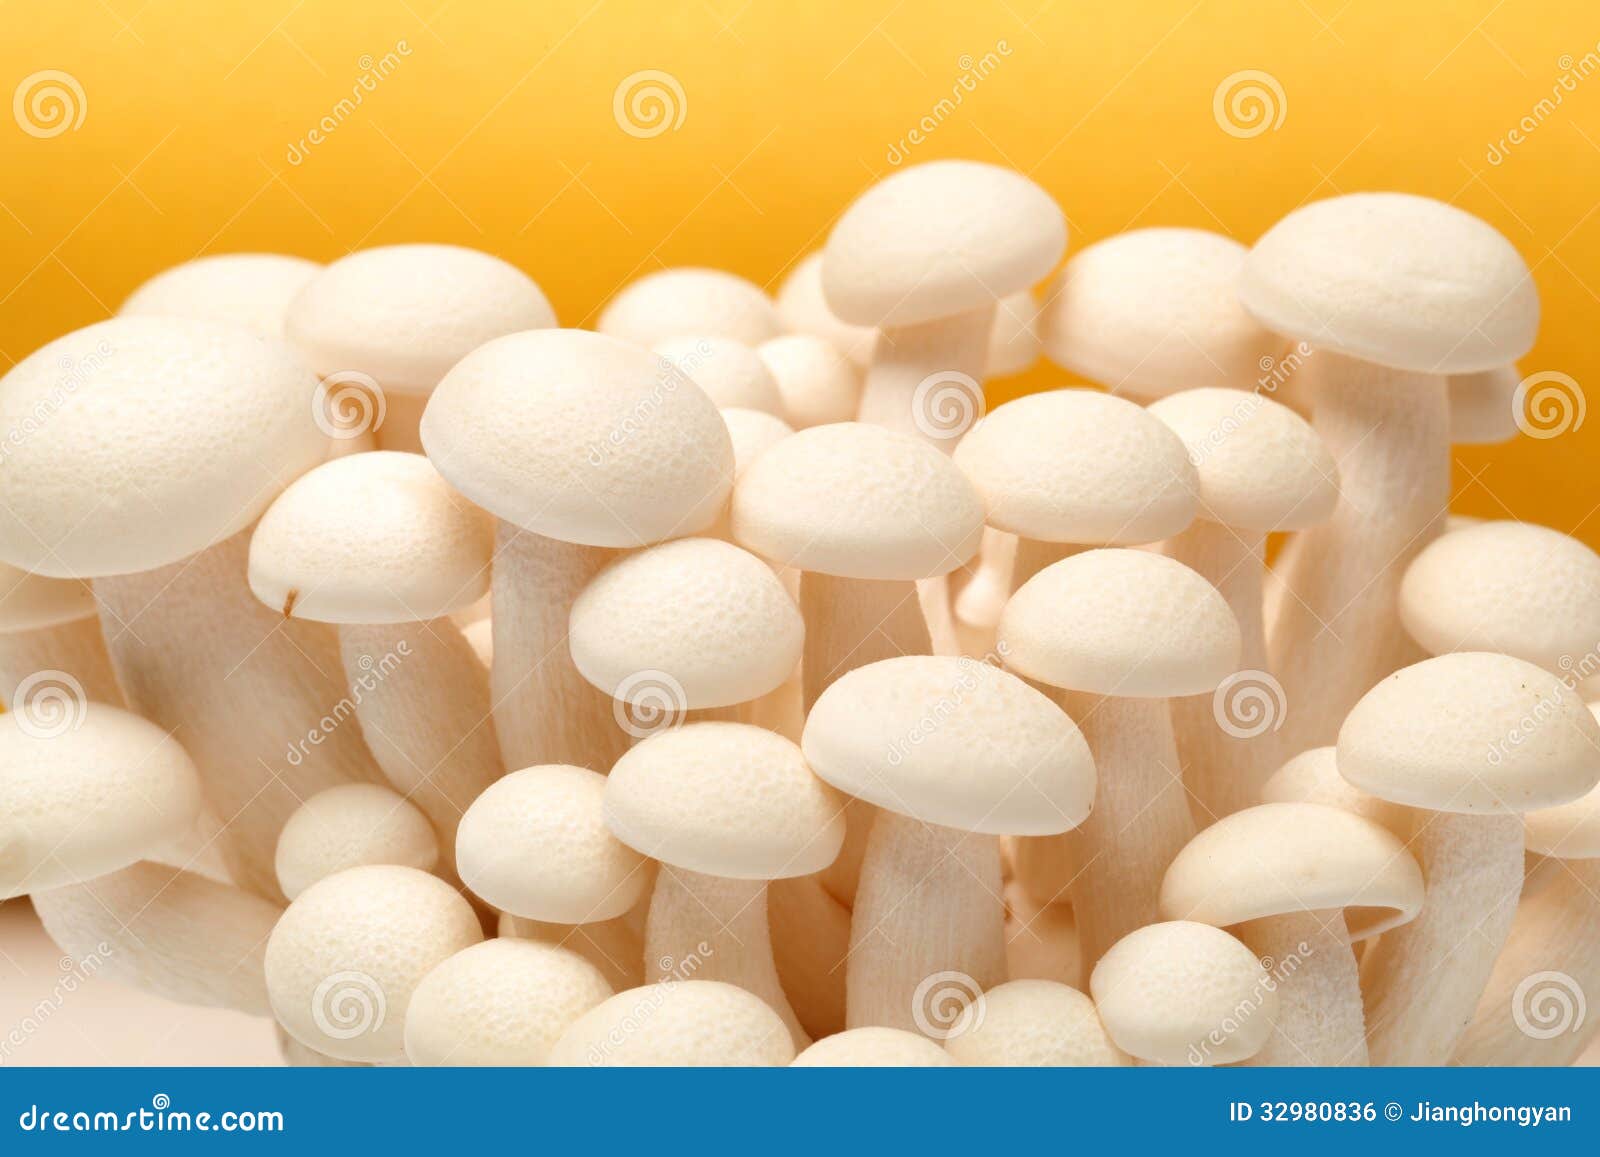 White Shimeji Mushroom Image